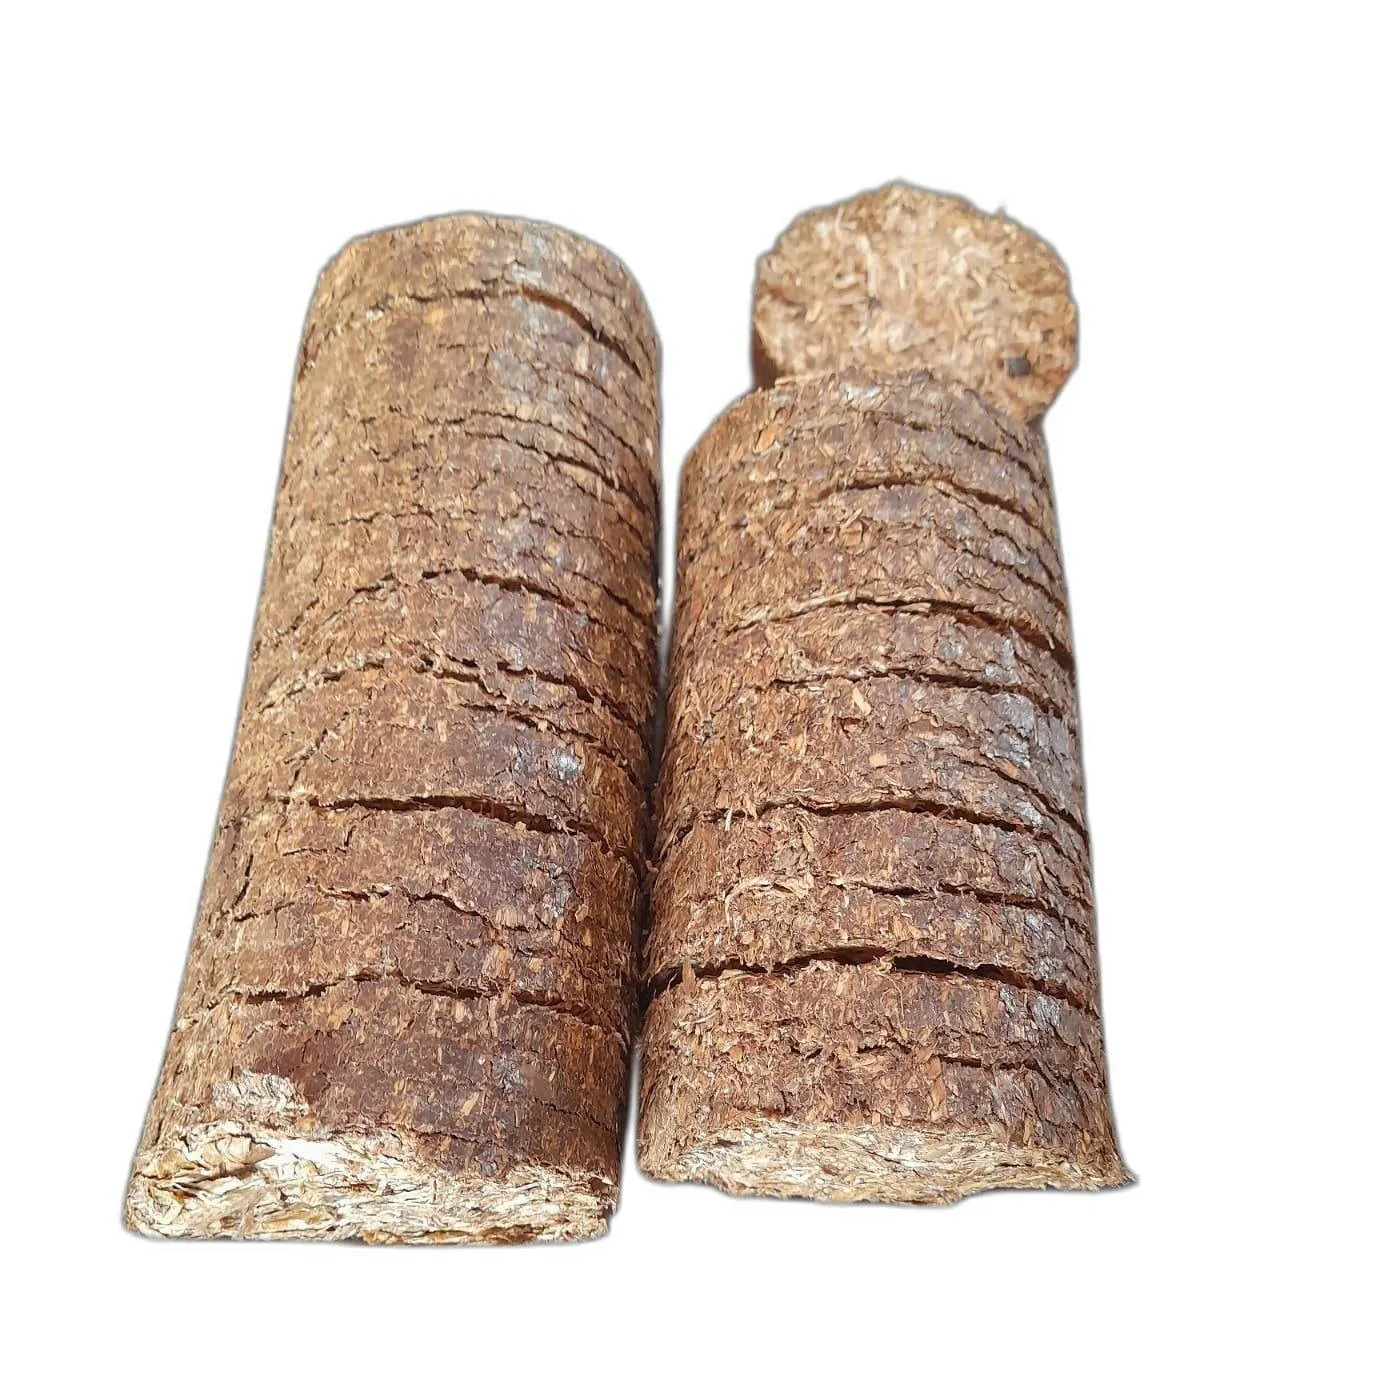 High Quality Wood Briquettes EU approved Wood Briquettes For Sale In Cheap Price Wood Briquettes